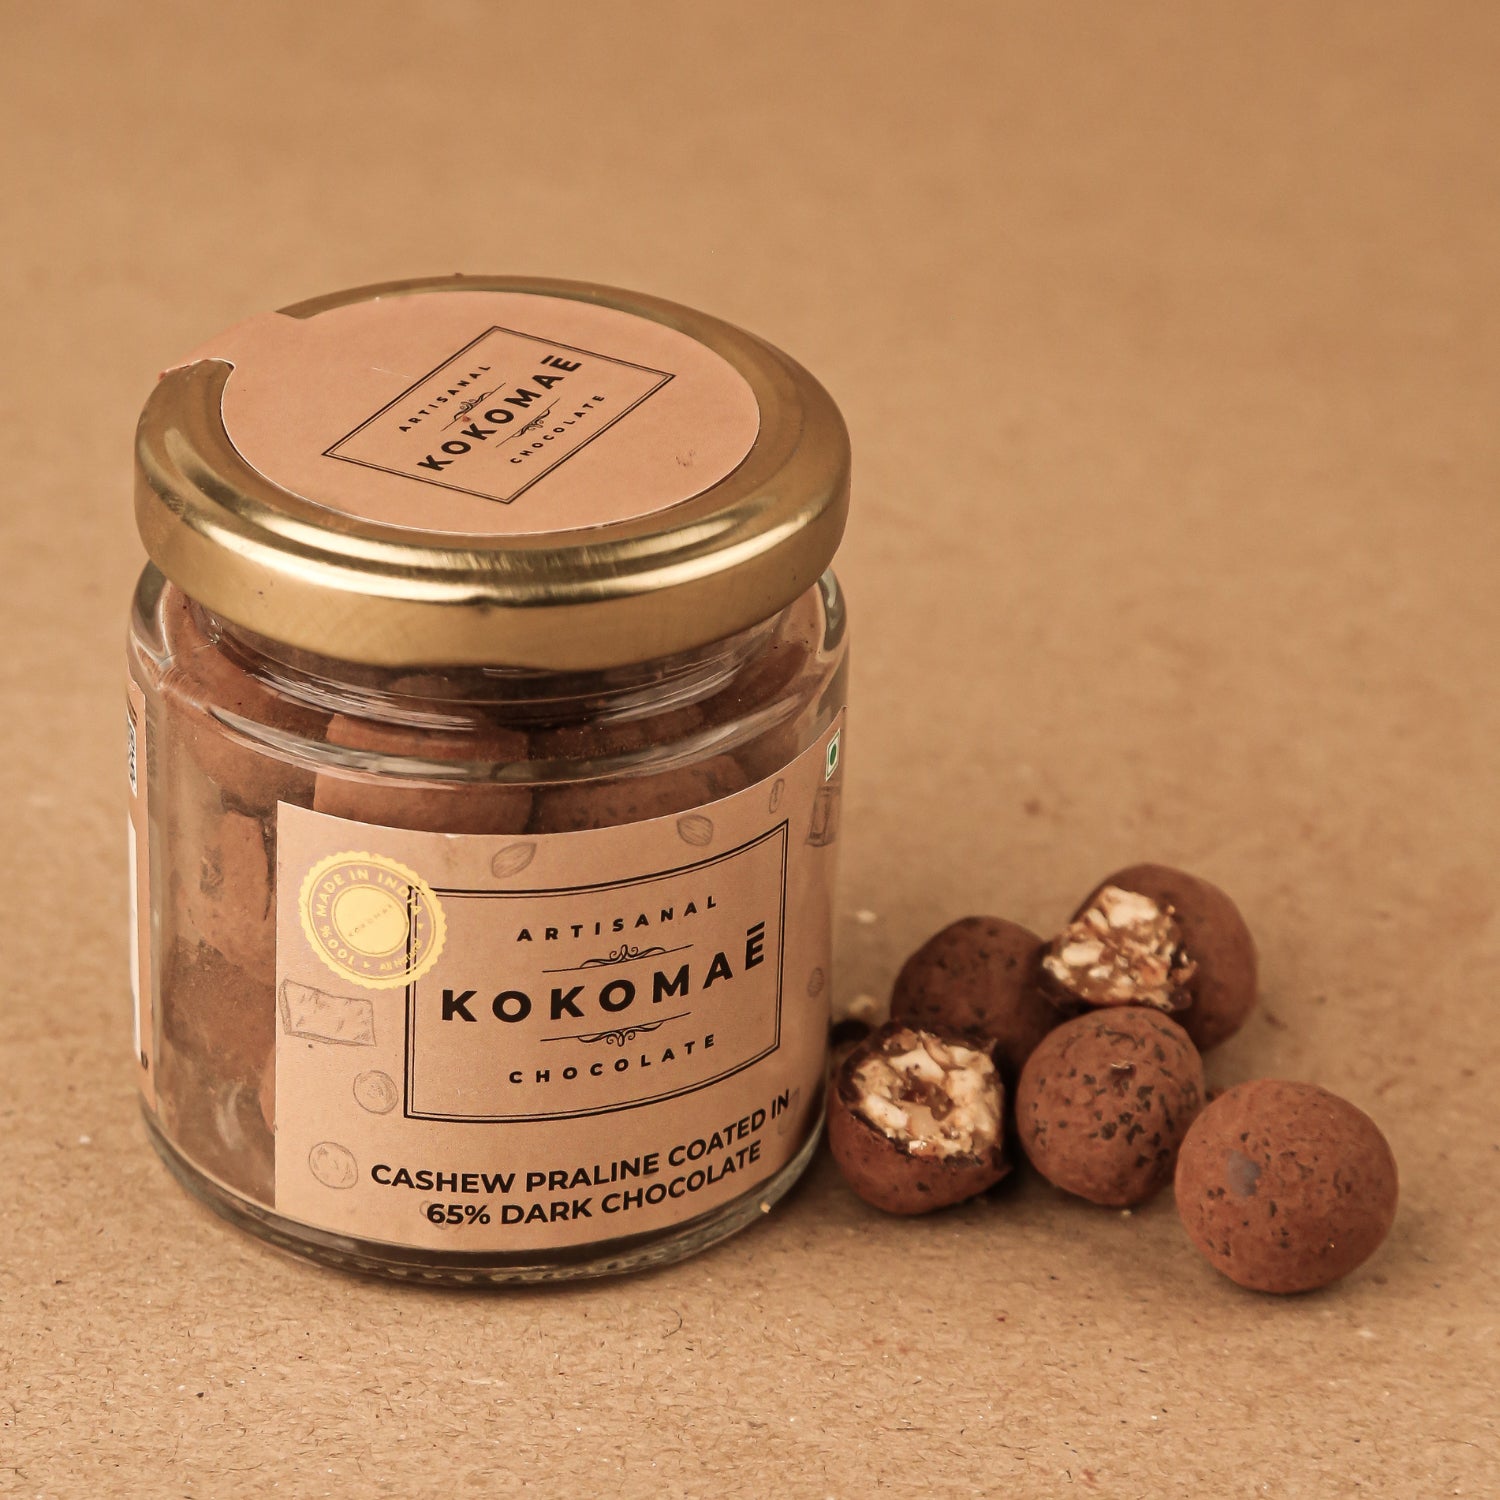 Kokomaē Cashew Praline Dragees lusiously coated in 65% Dark Chocolate